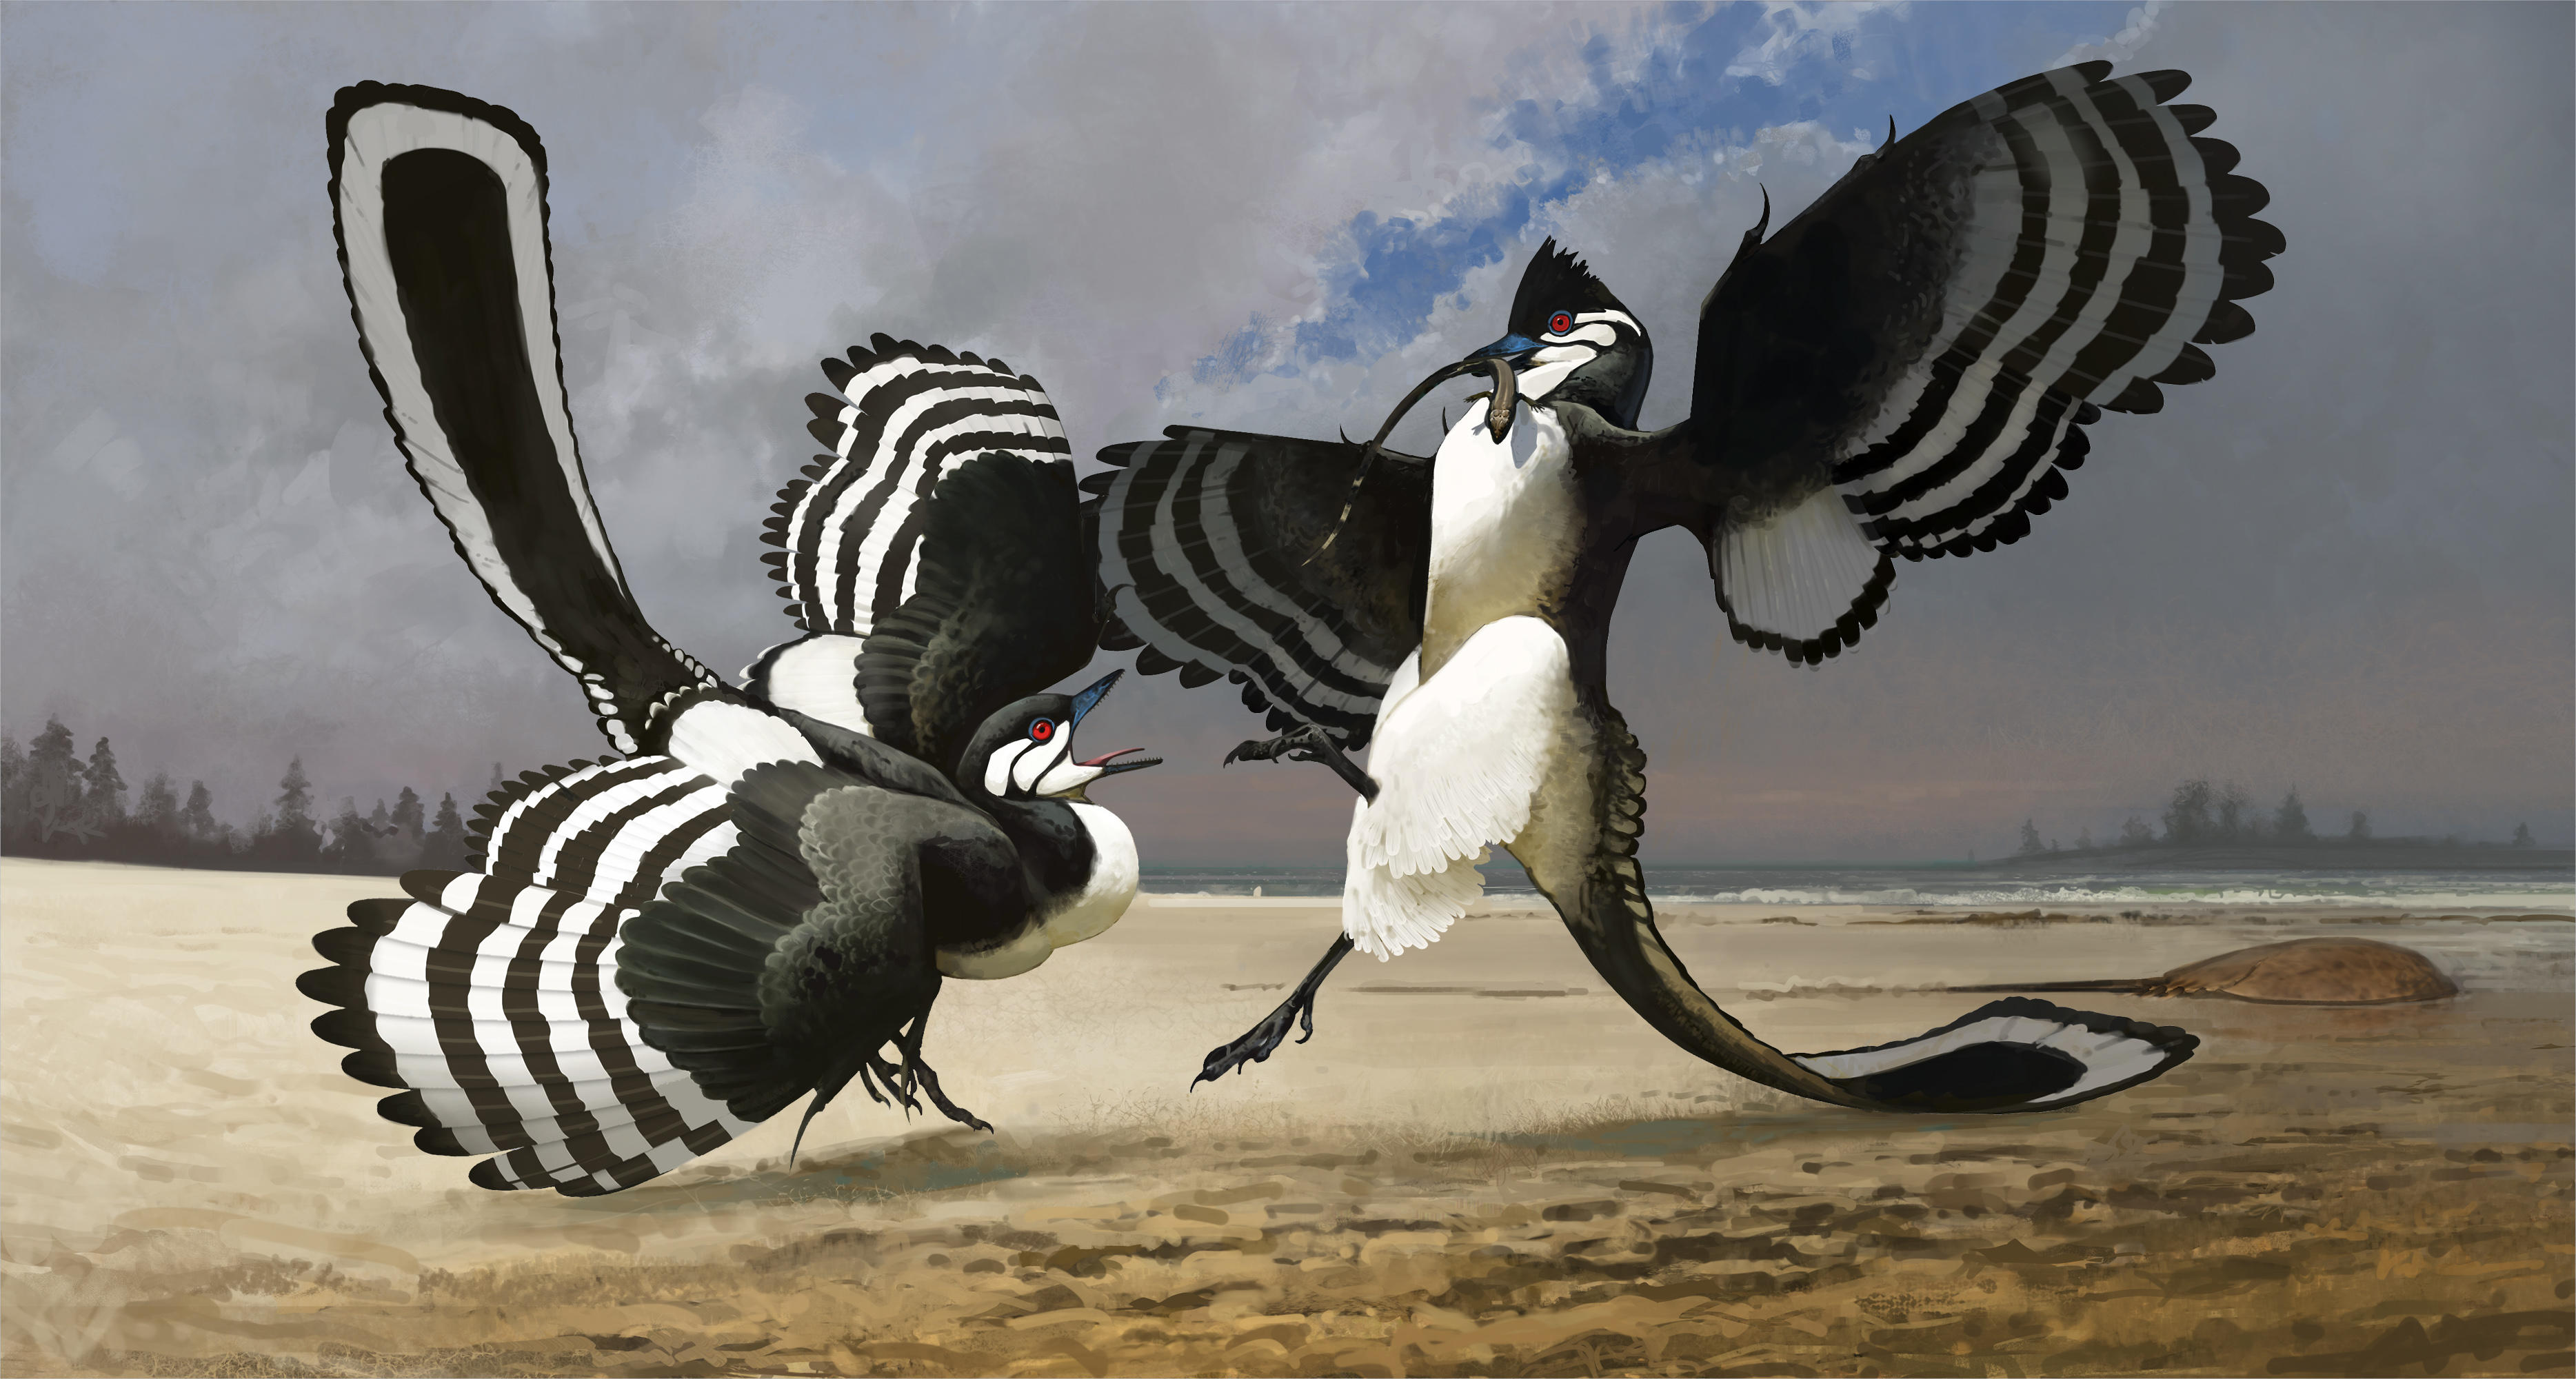 archaeopteryx-final-small.jpg 